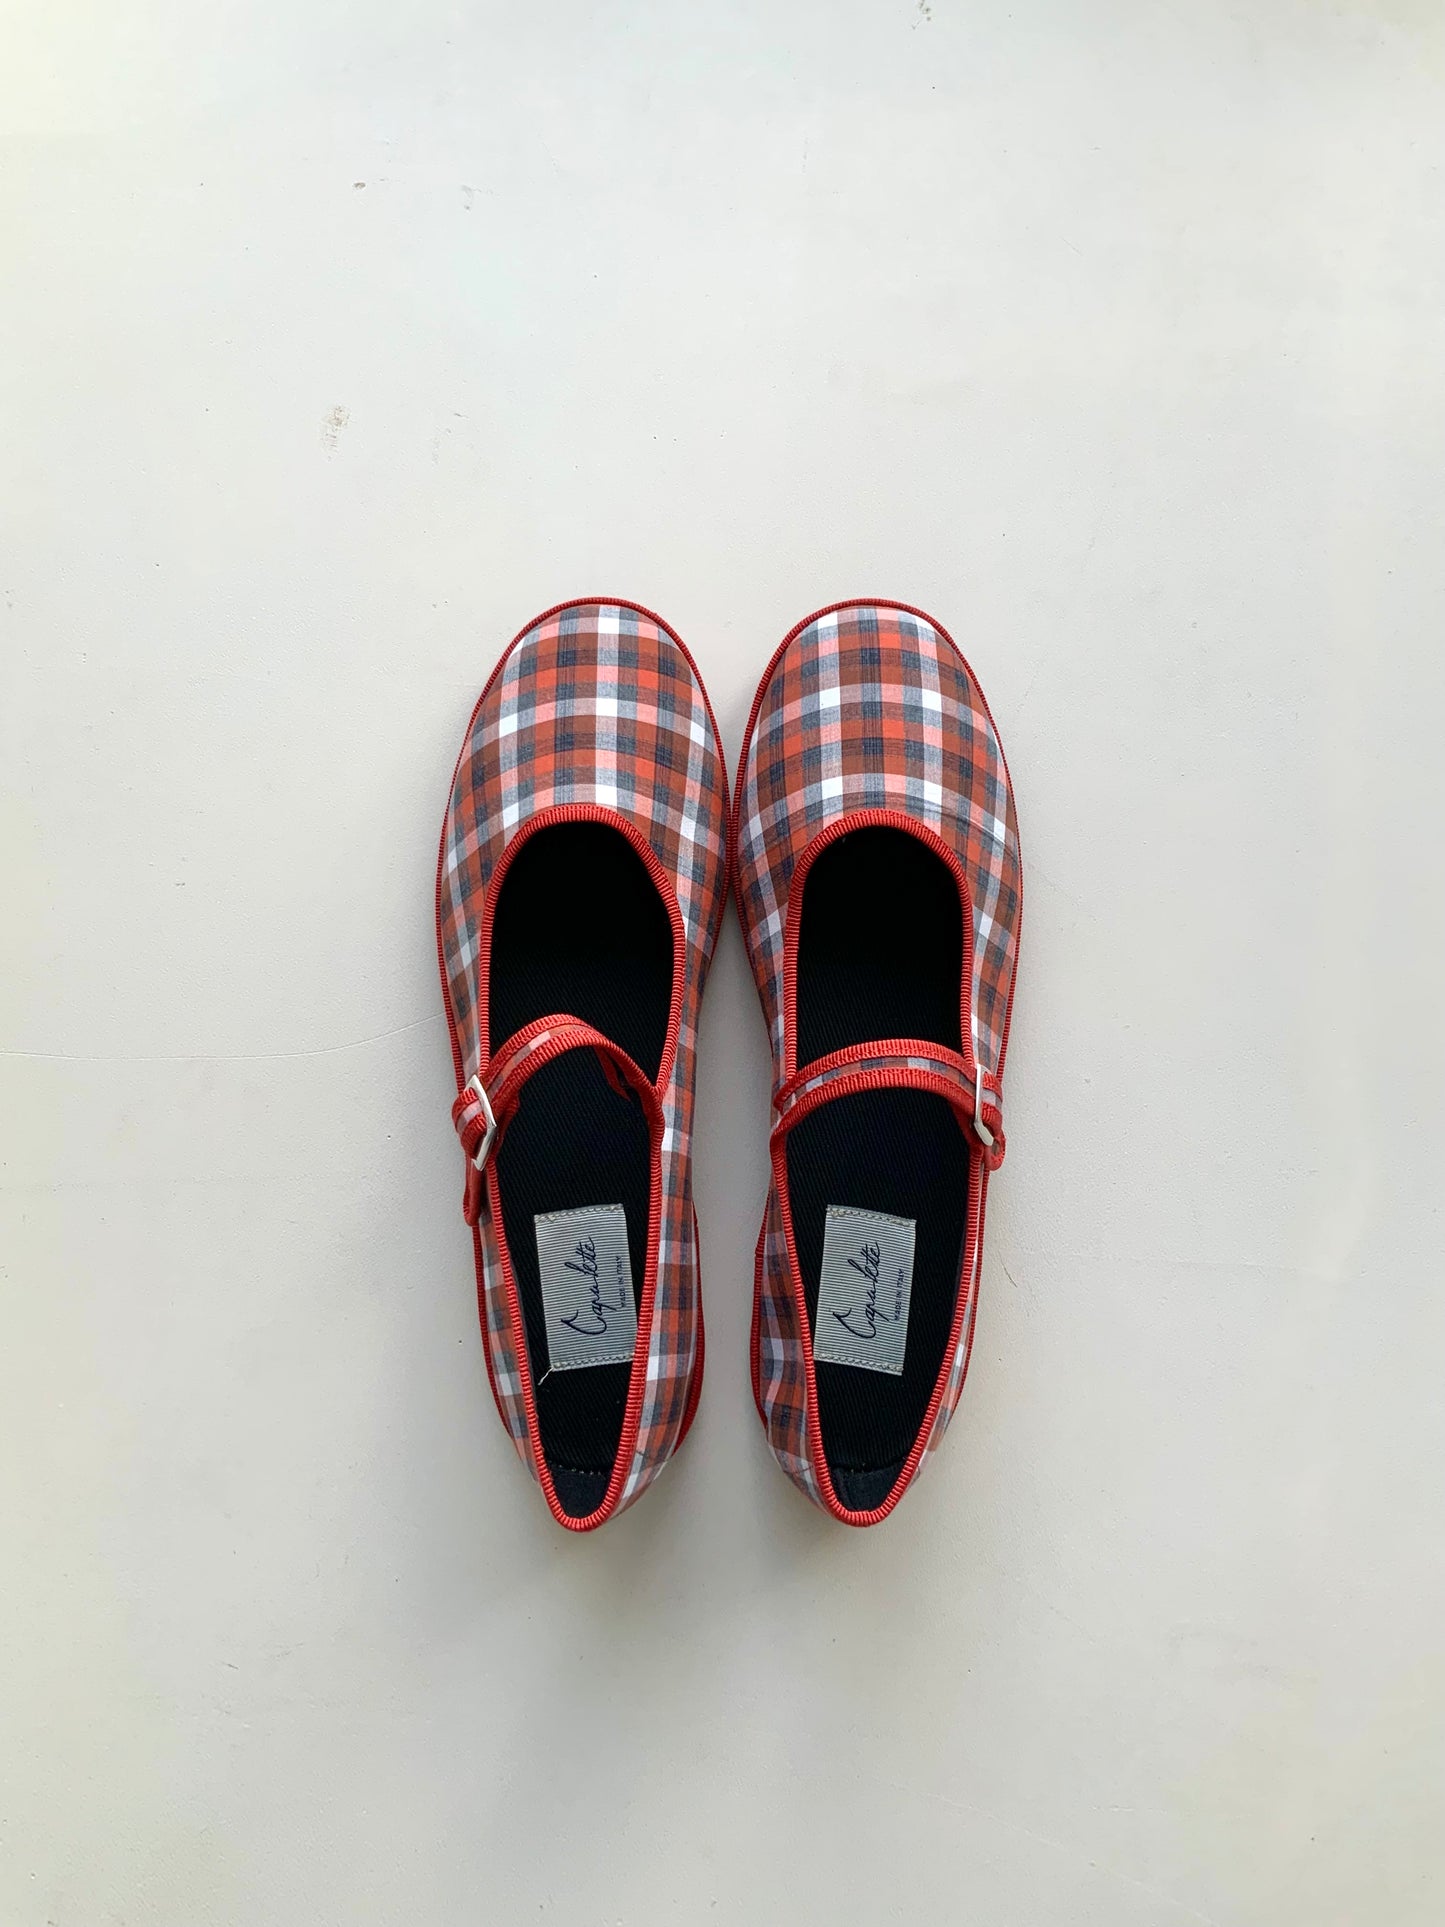 Shoes Women - Friulane - Checkered